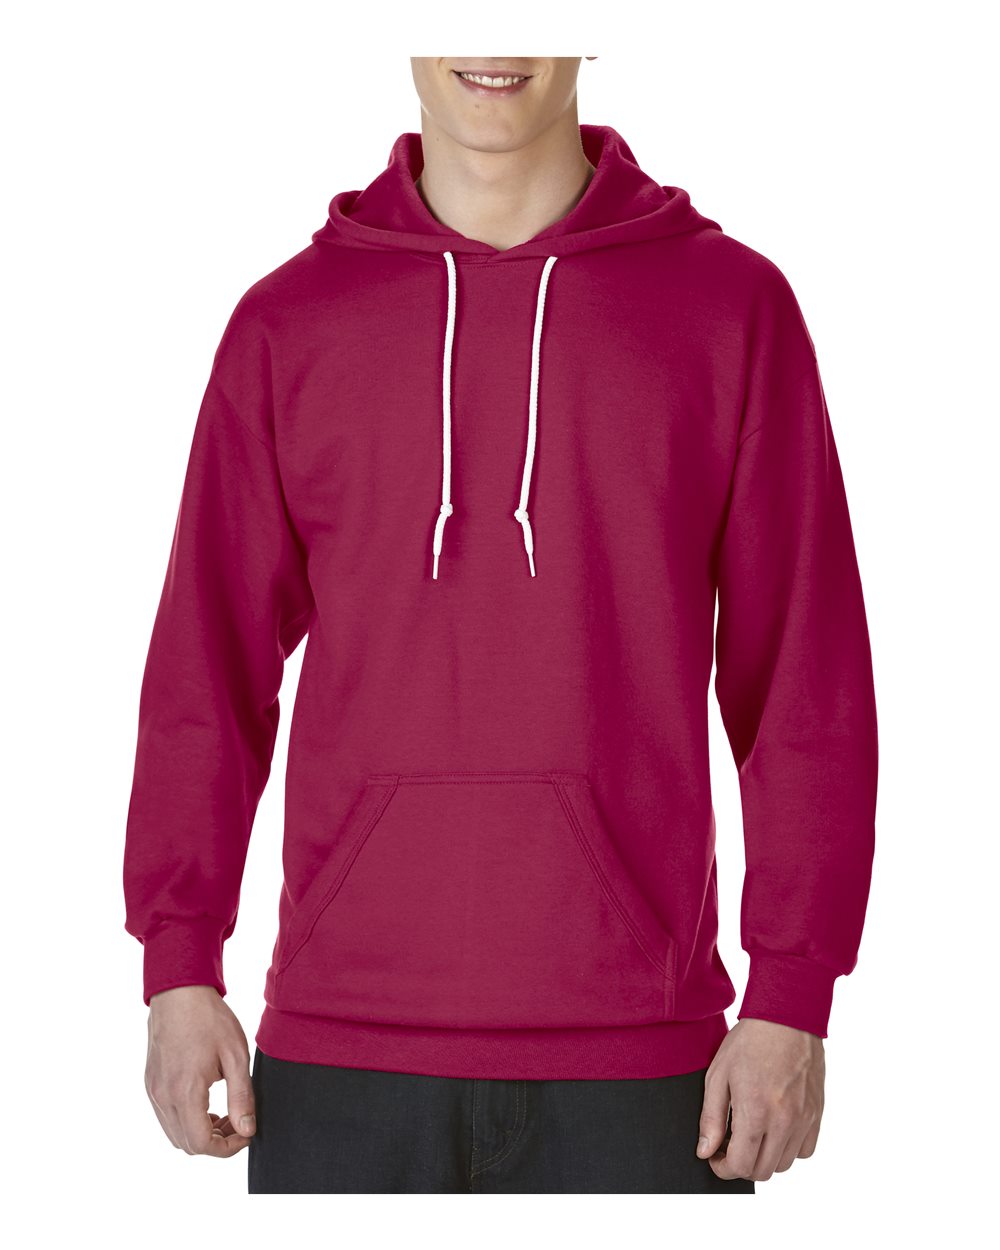 Hooded Fleece Sweatshirt - 71500-Anvil